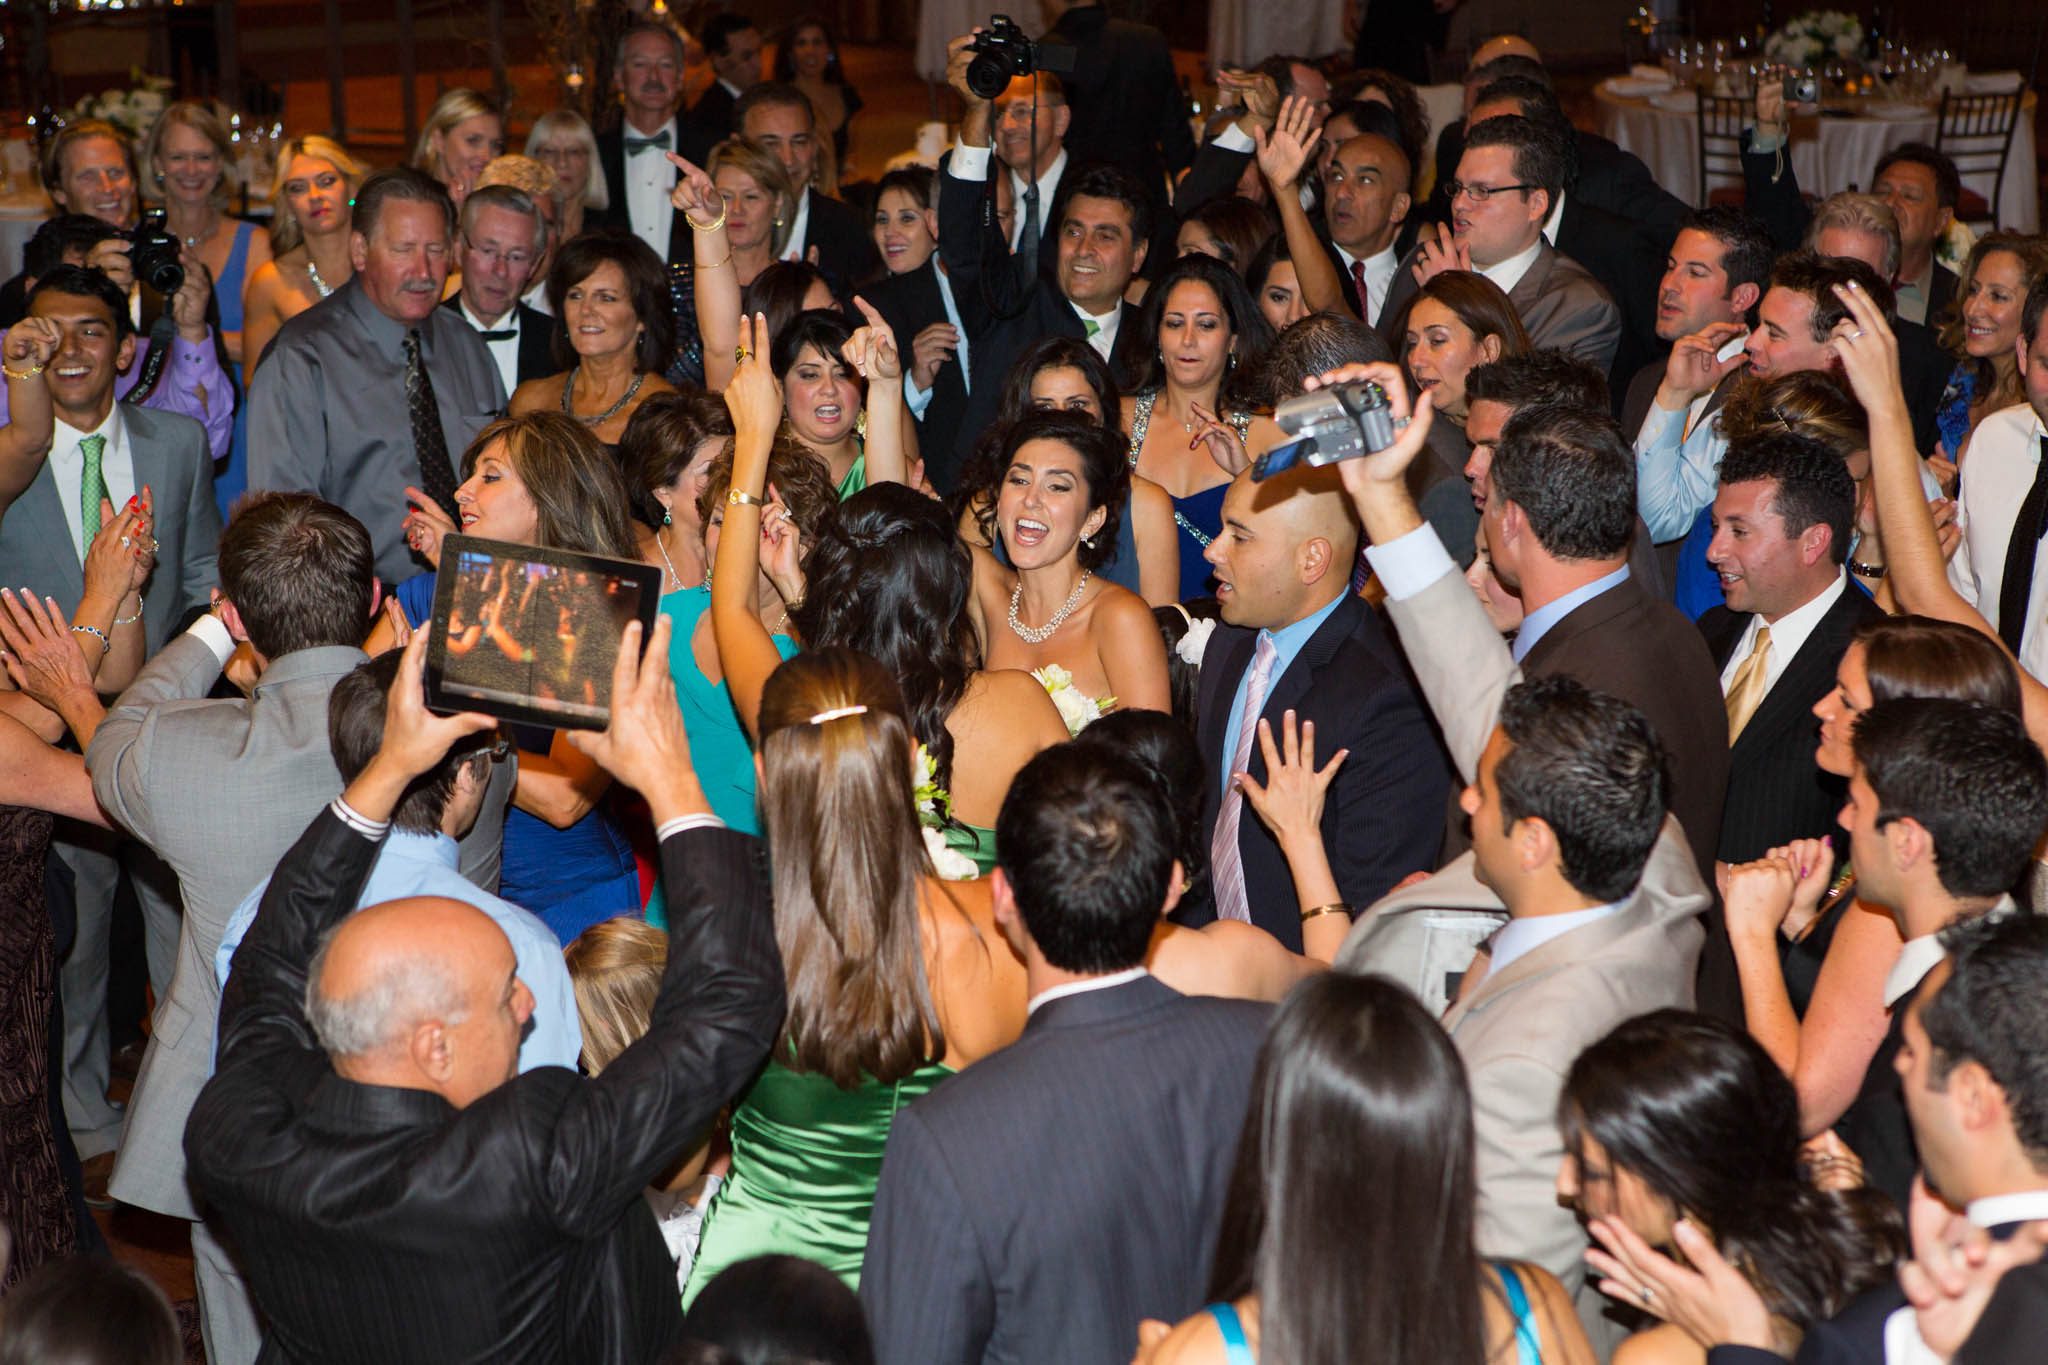 wedding reception dancing, crowded dance floor – Lake Tahoe Truckee Ritz Carlton Persian American wedding photography